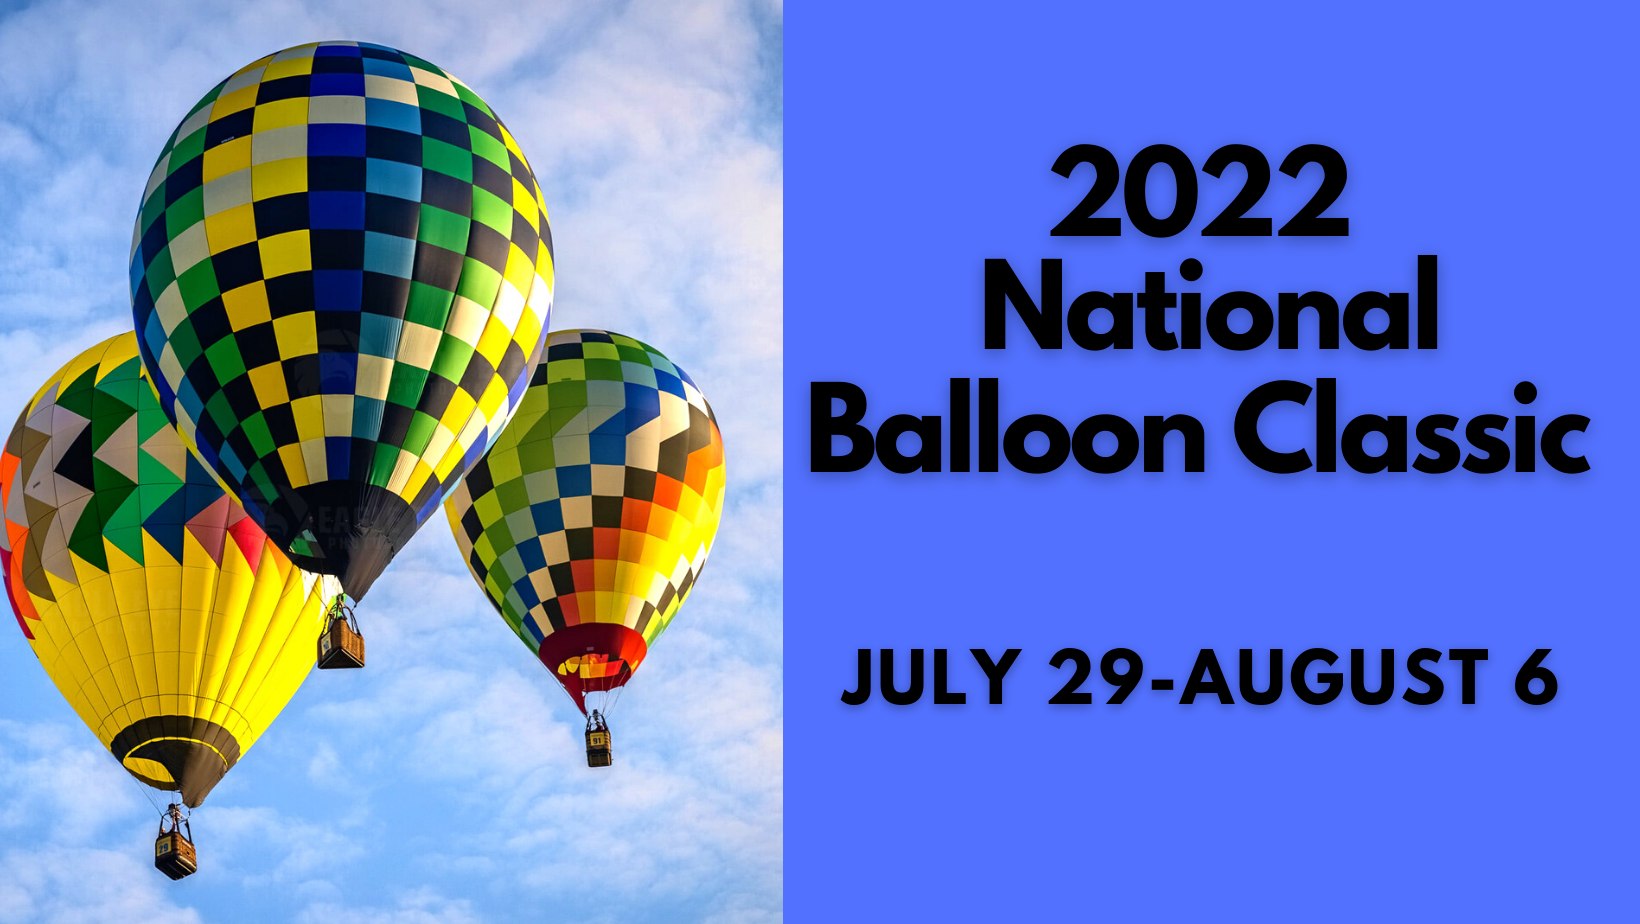 National Balloon Classic Festival 2022